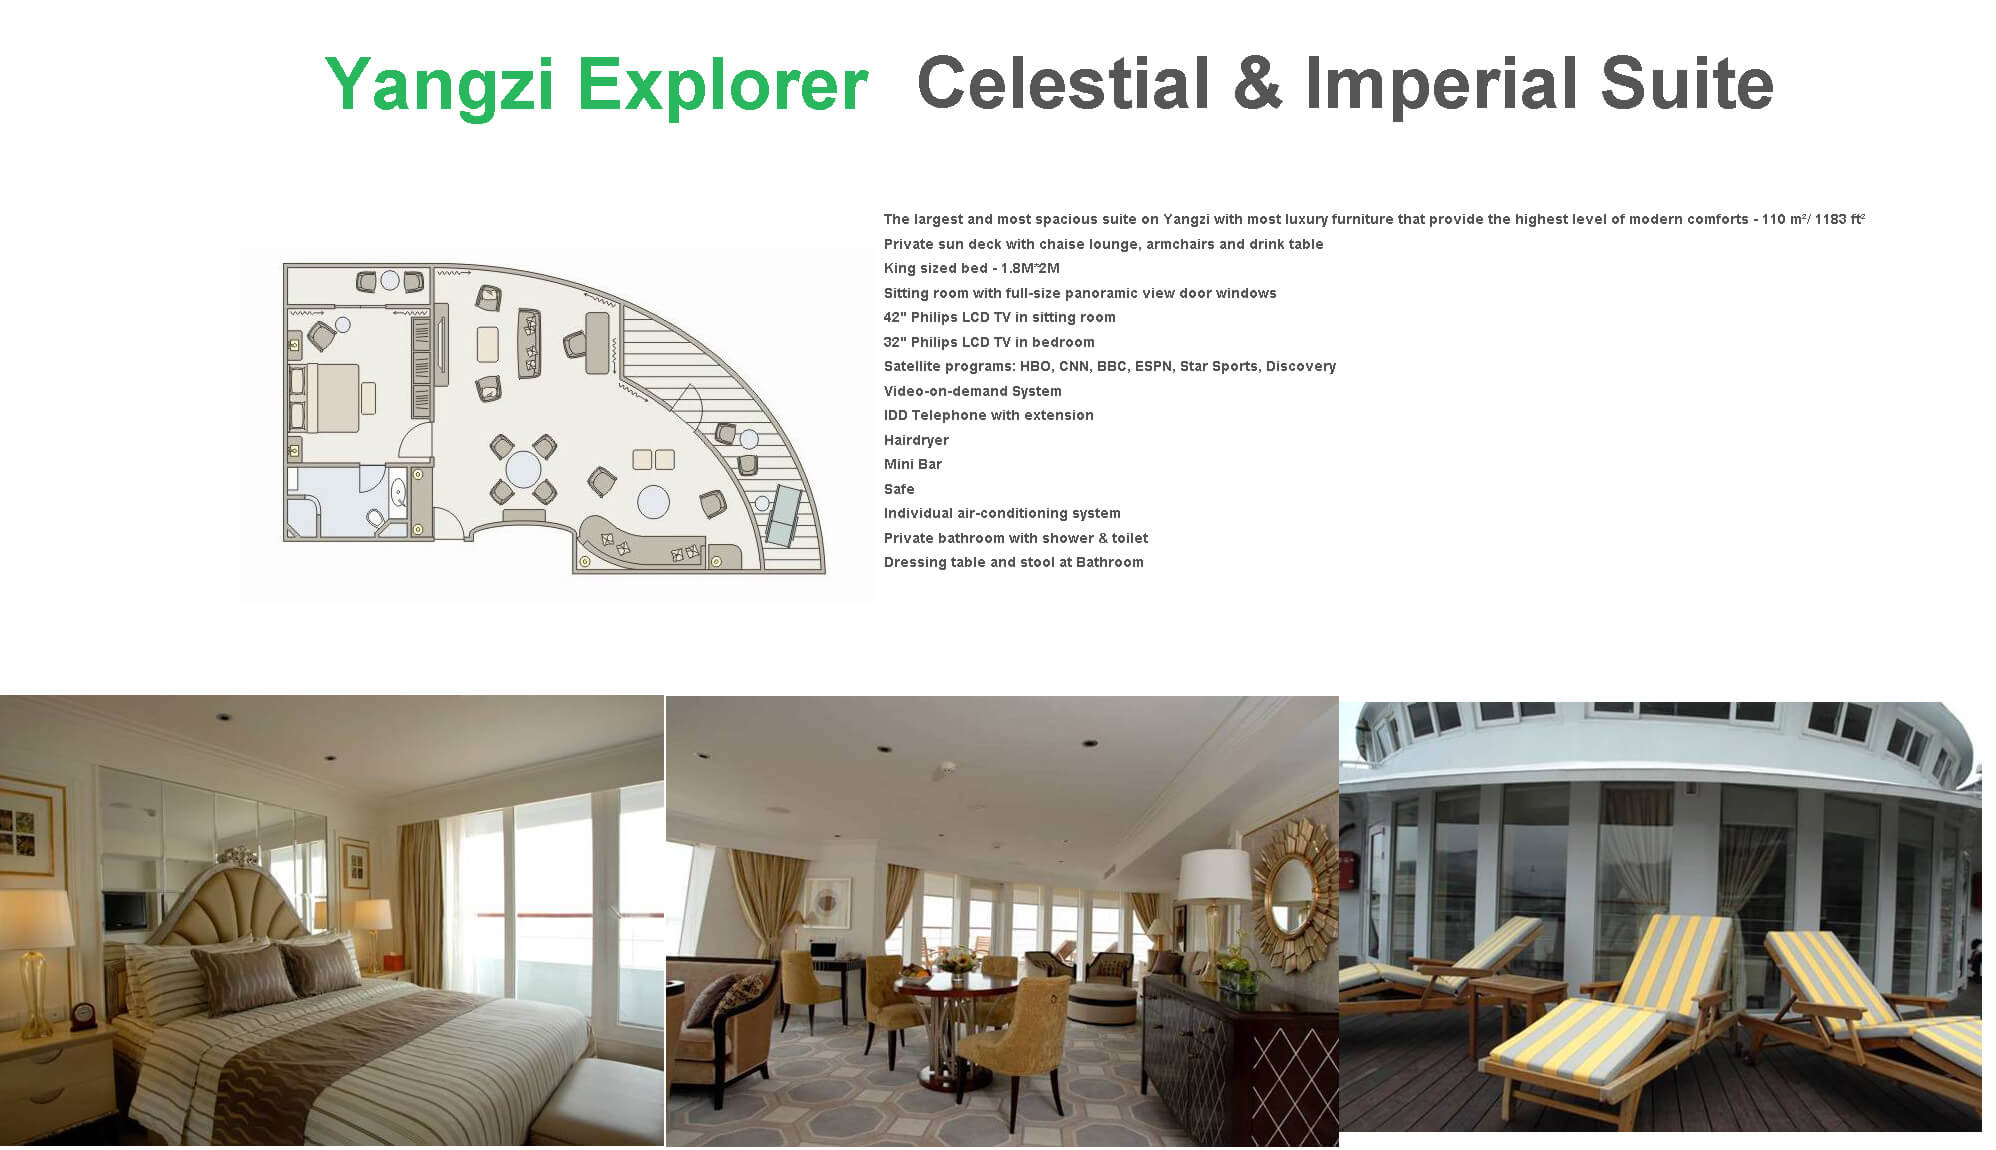 Yangzi Explorer cabin-Yangtze River Cruise